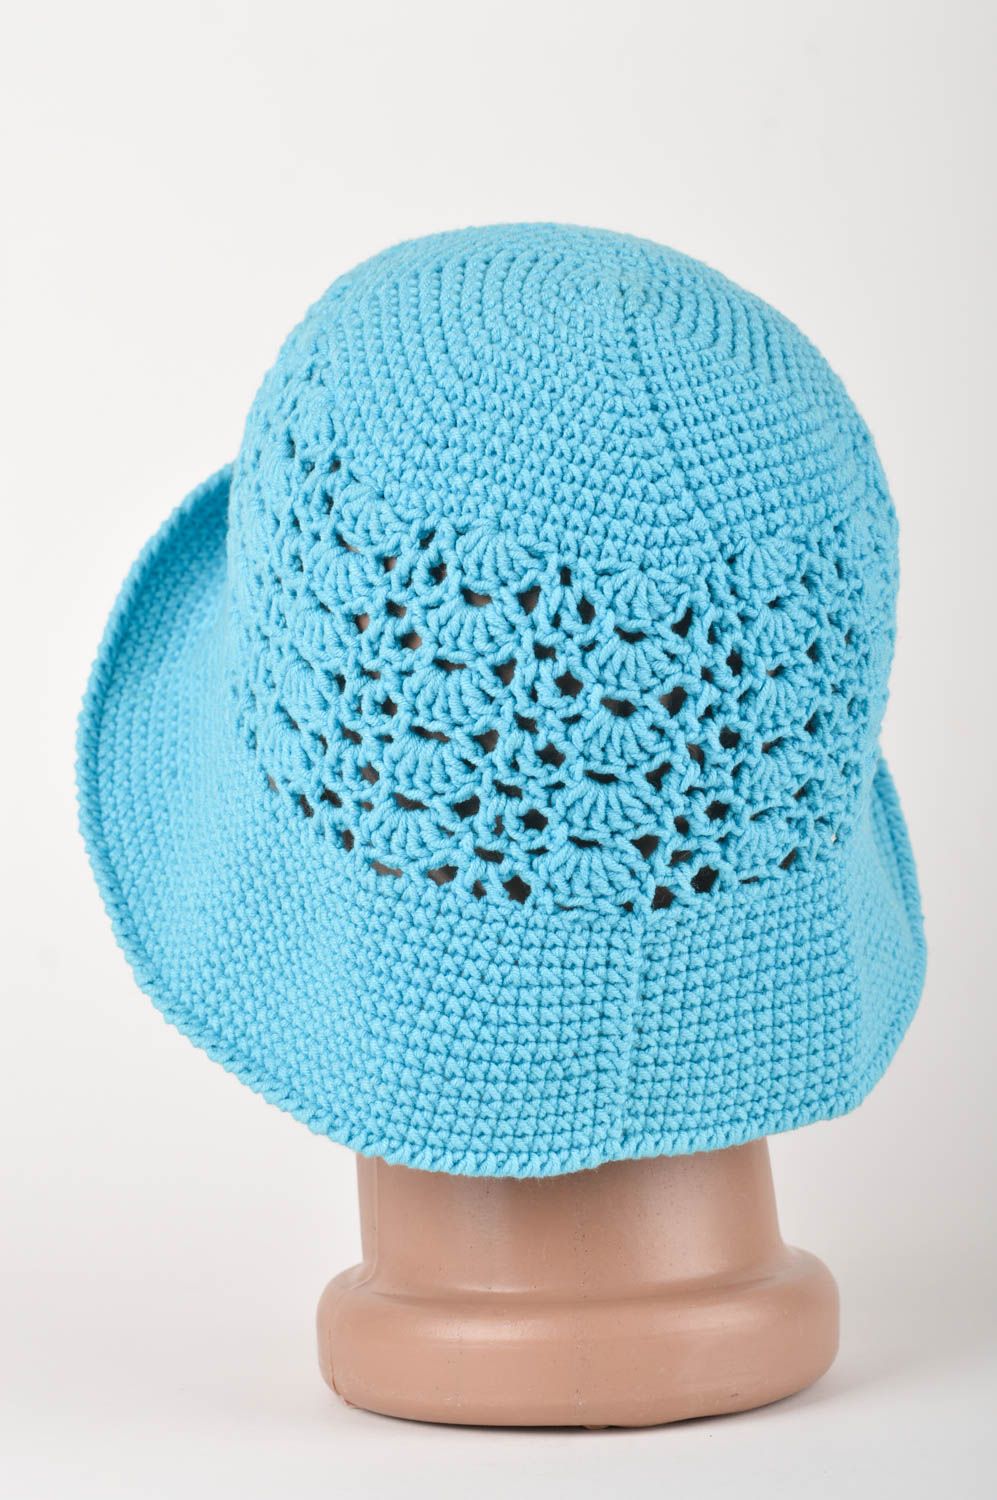 Beautiful handmade crochet hat fashion accessories for kids crochet ideas photo 5